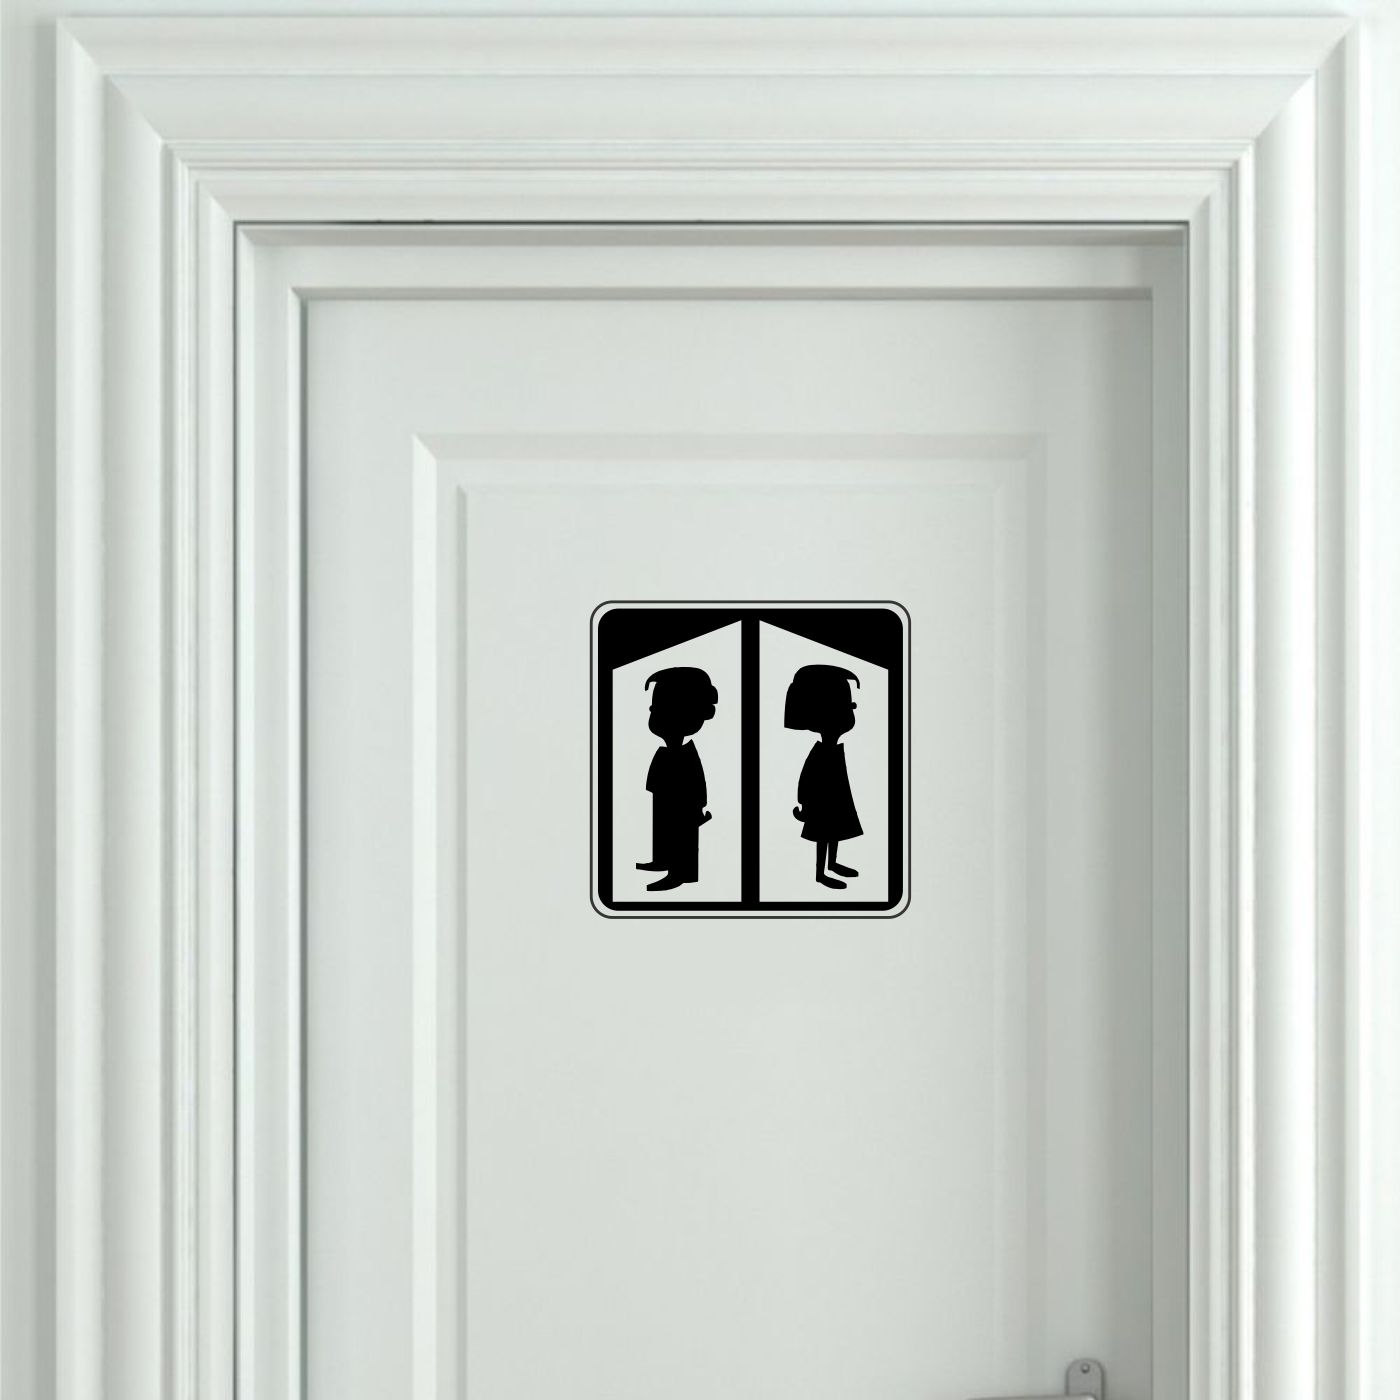 ORKA Medium Boys And Girl Design Wathroom Door Sticker  